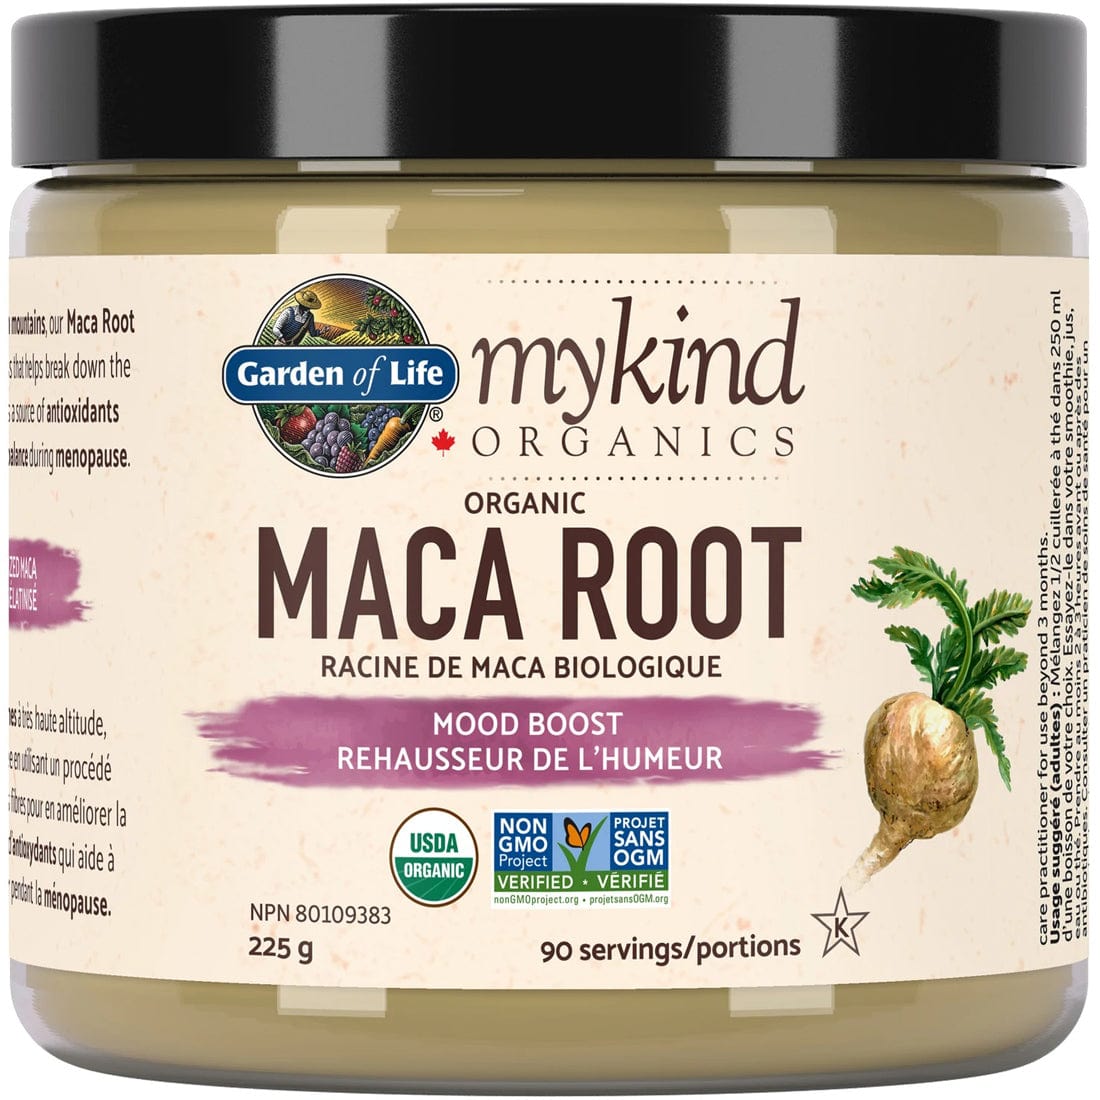 Garden of Life mykind Organics Maca Root Powder, 225g